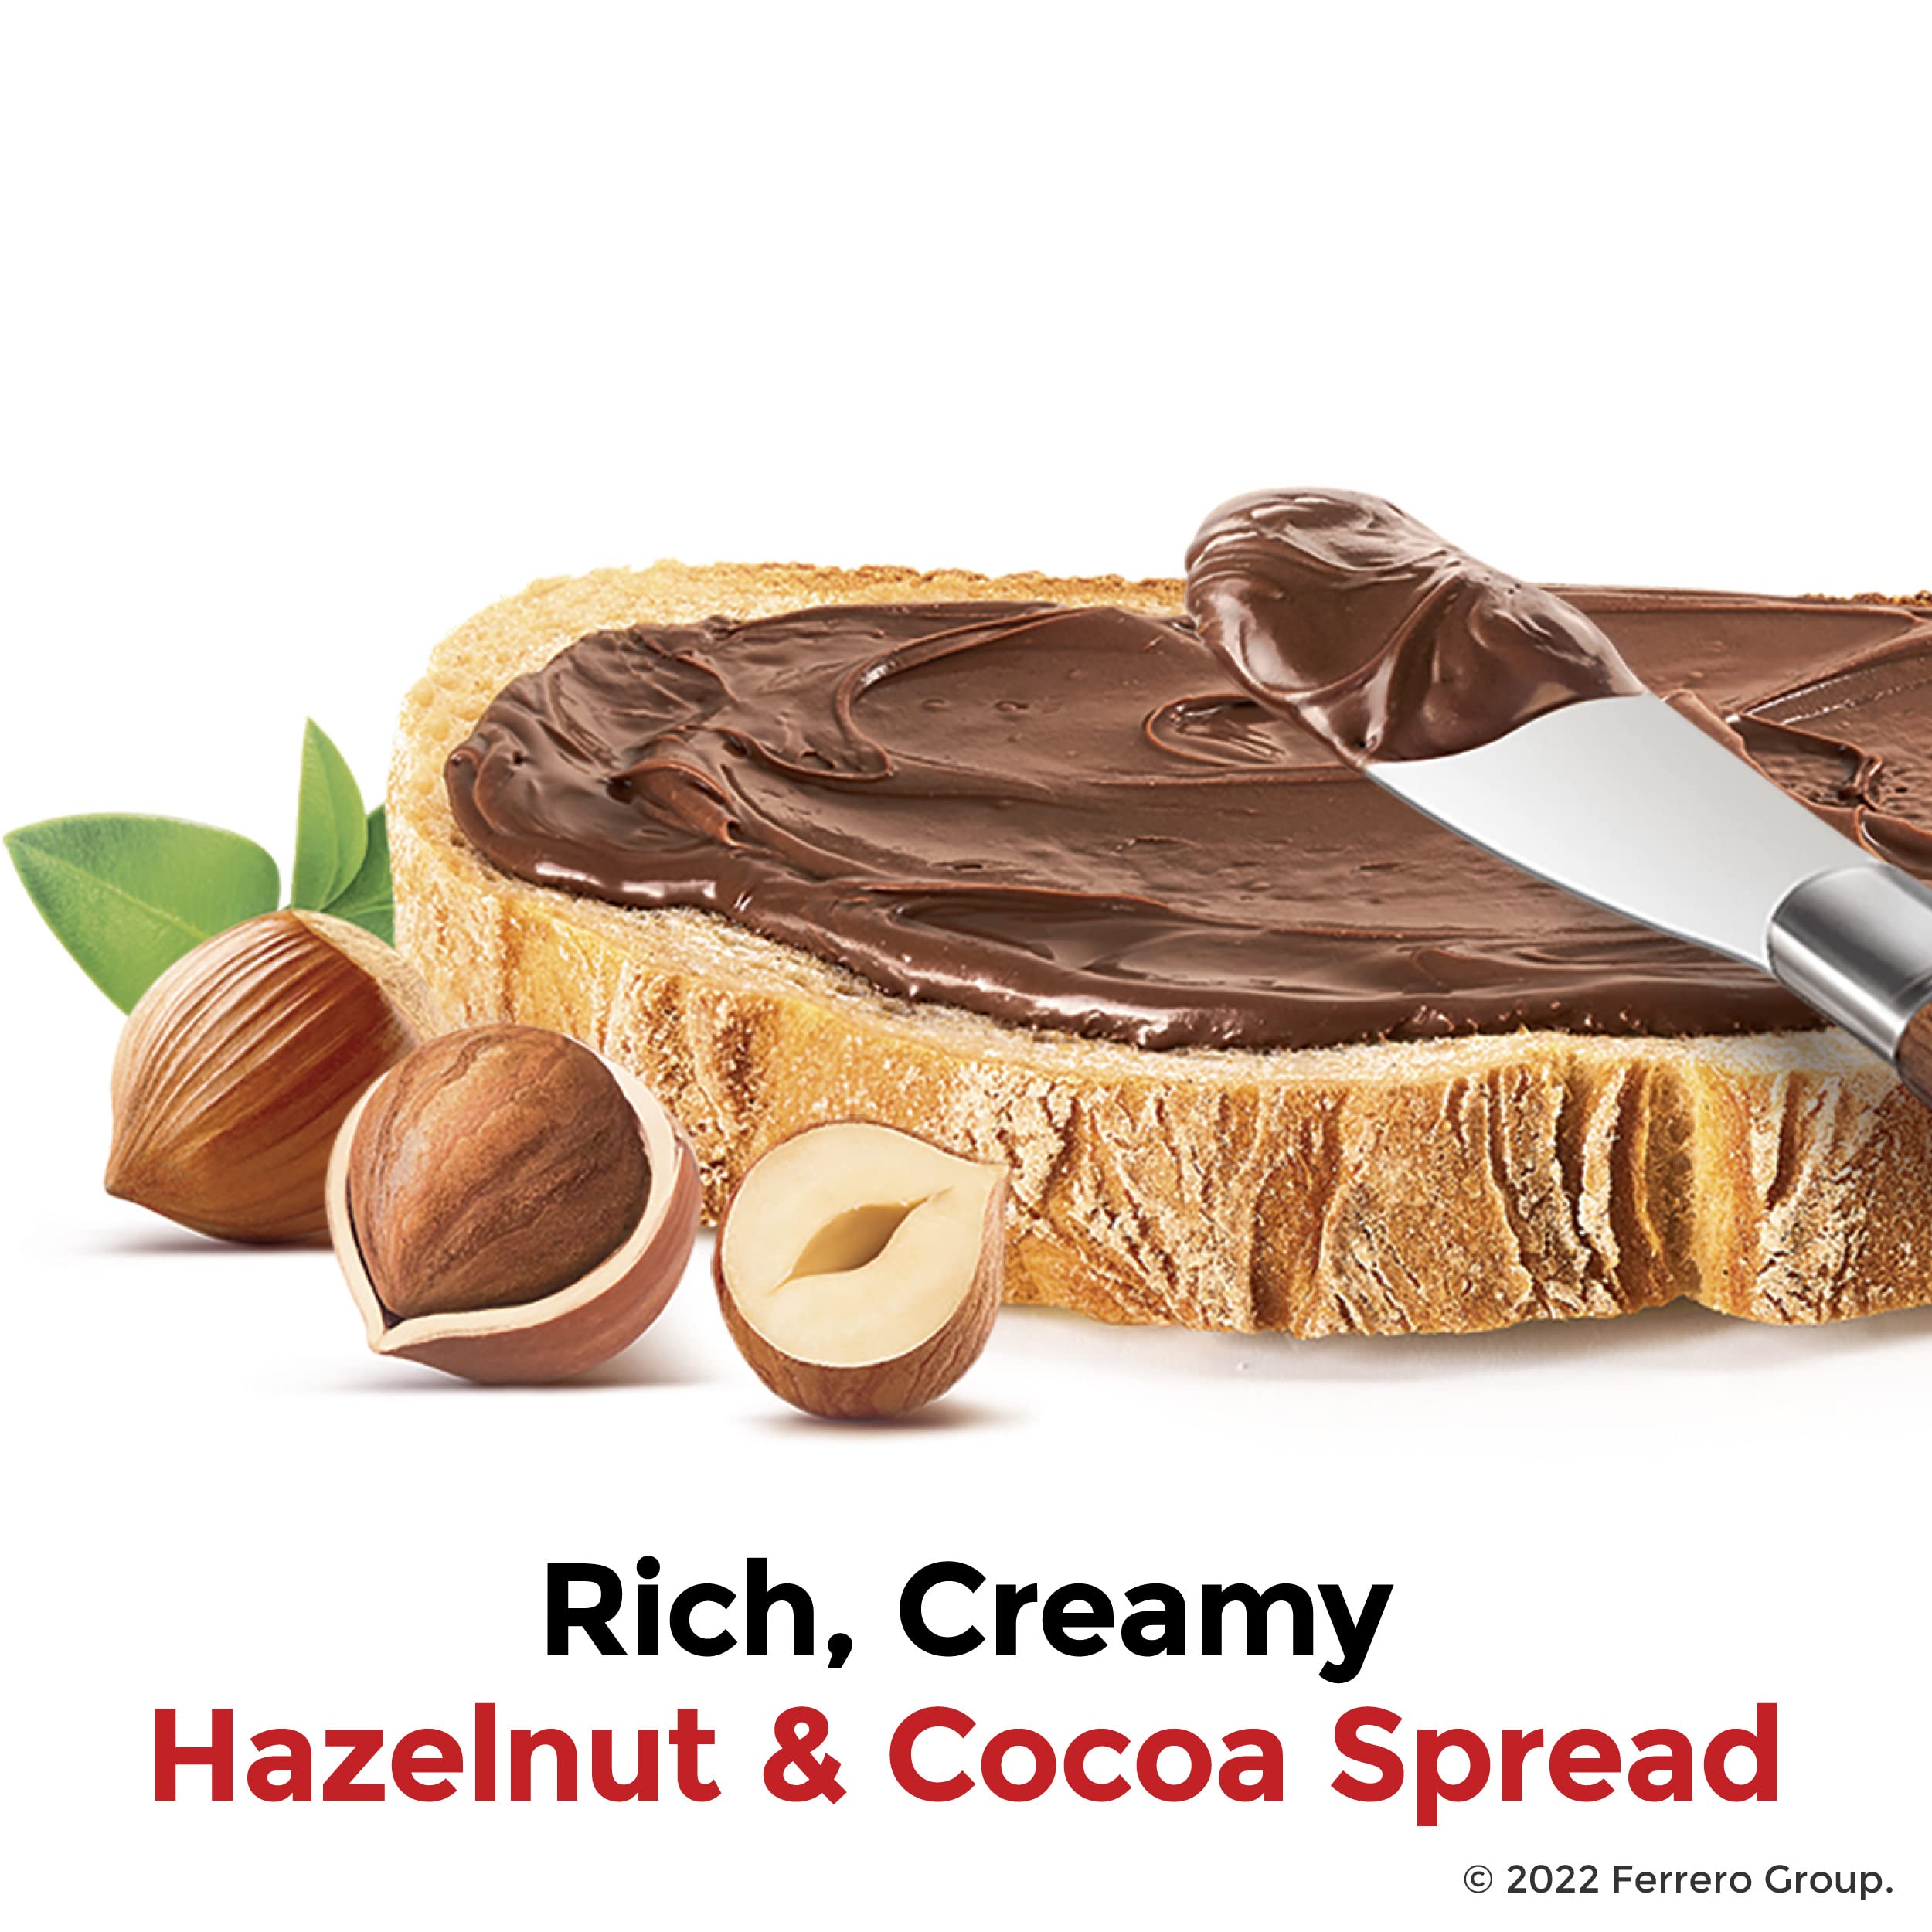 Nutella Hazelnut Spread With Cocoa For Breakfast, 2 Pack, 22.9 Oz Per Jar